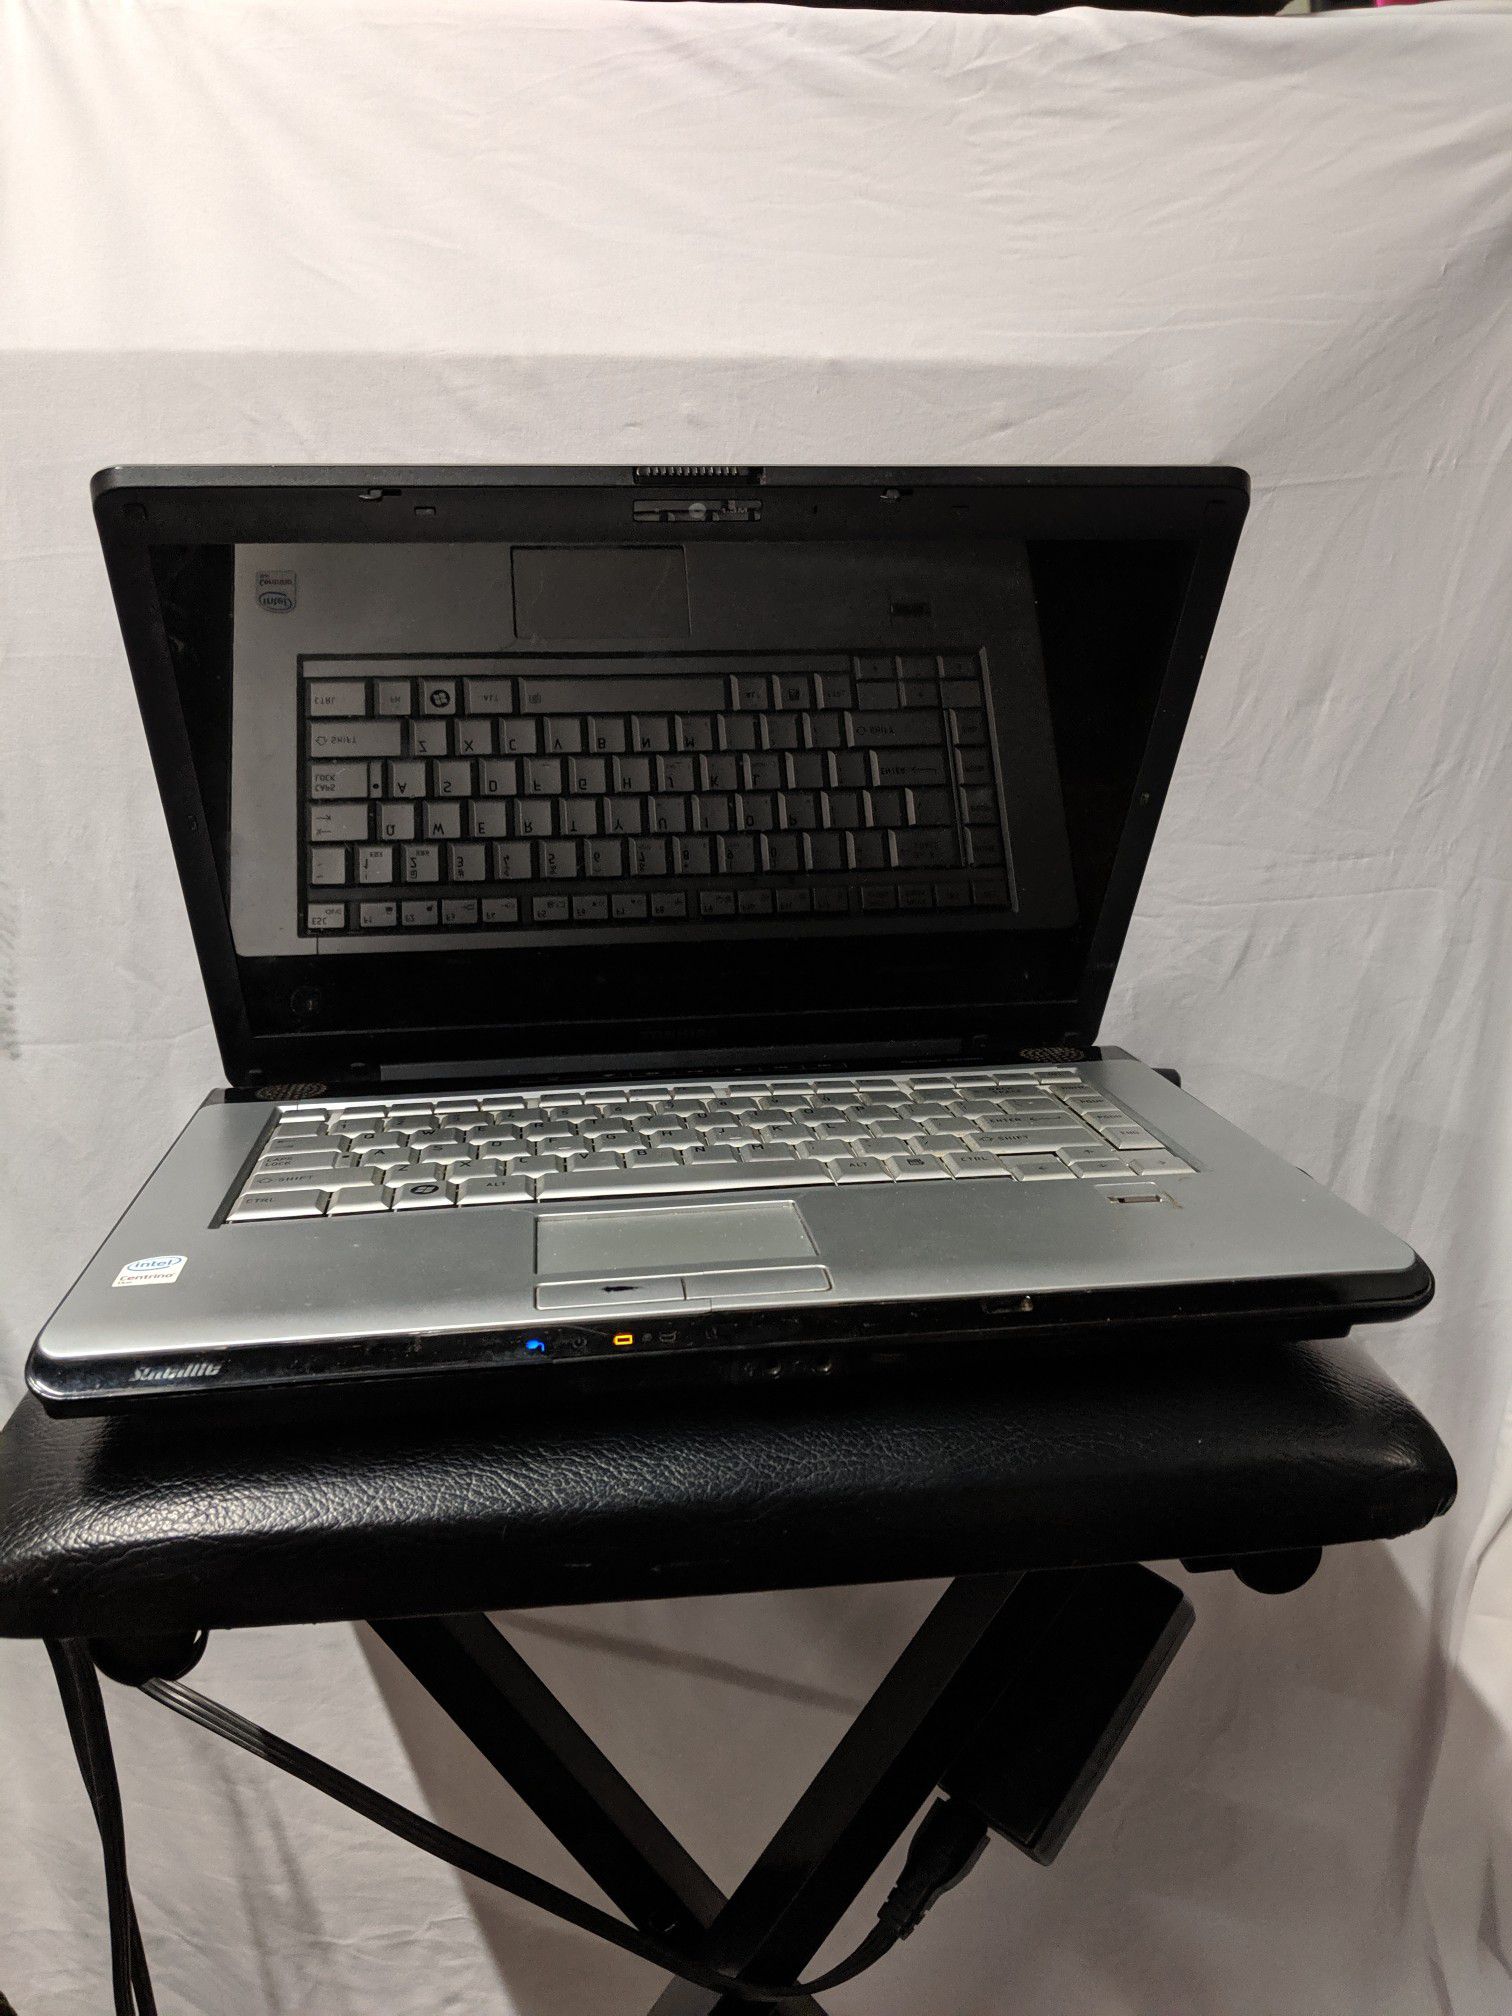 Toshiba A200 Notebook/Laptop- Parts/Repair